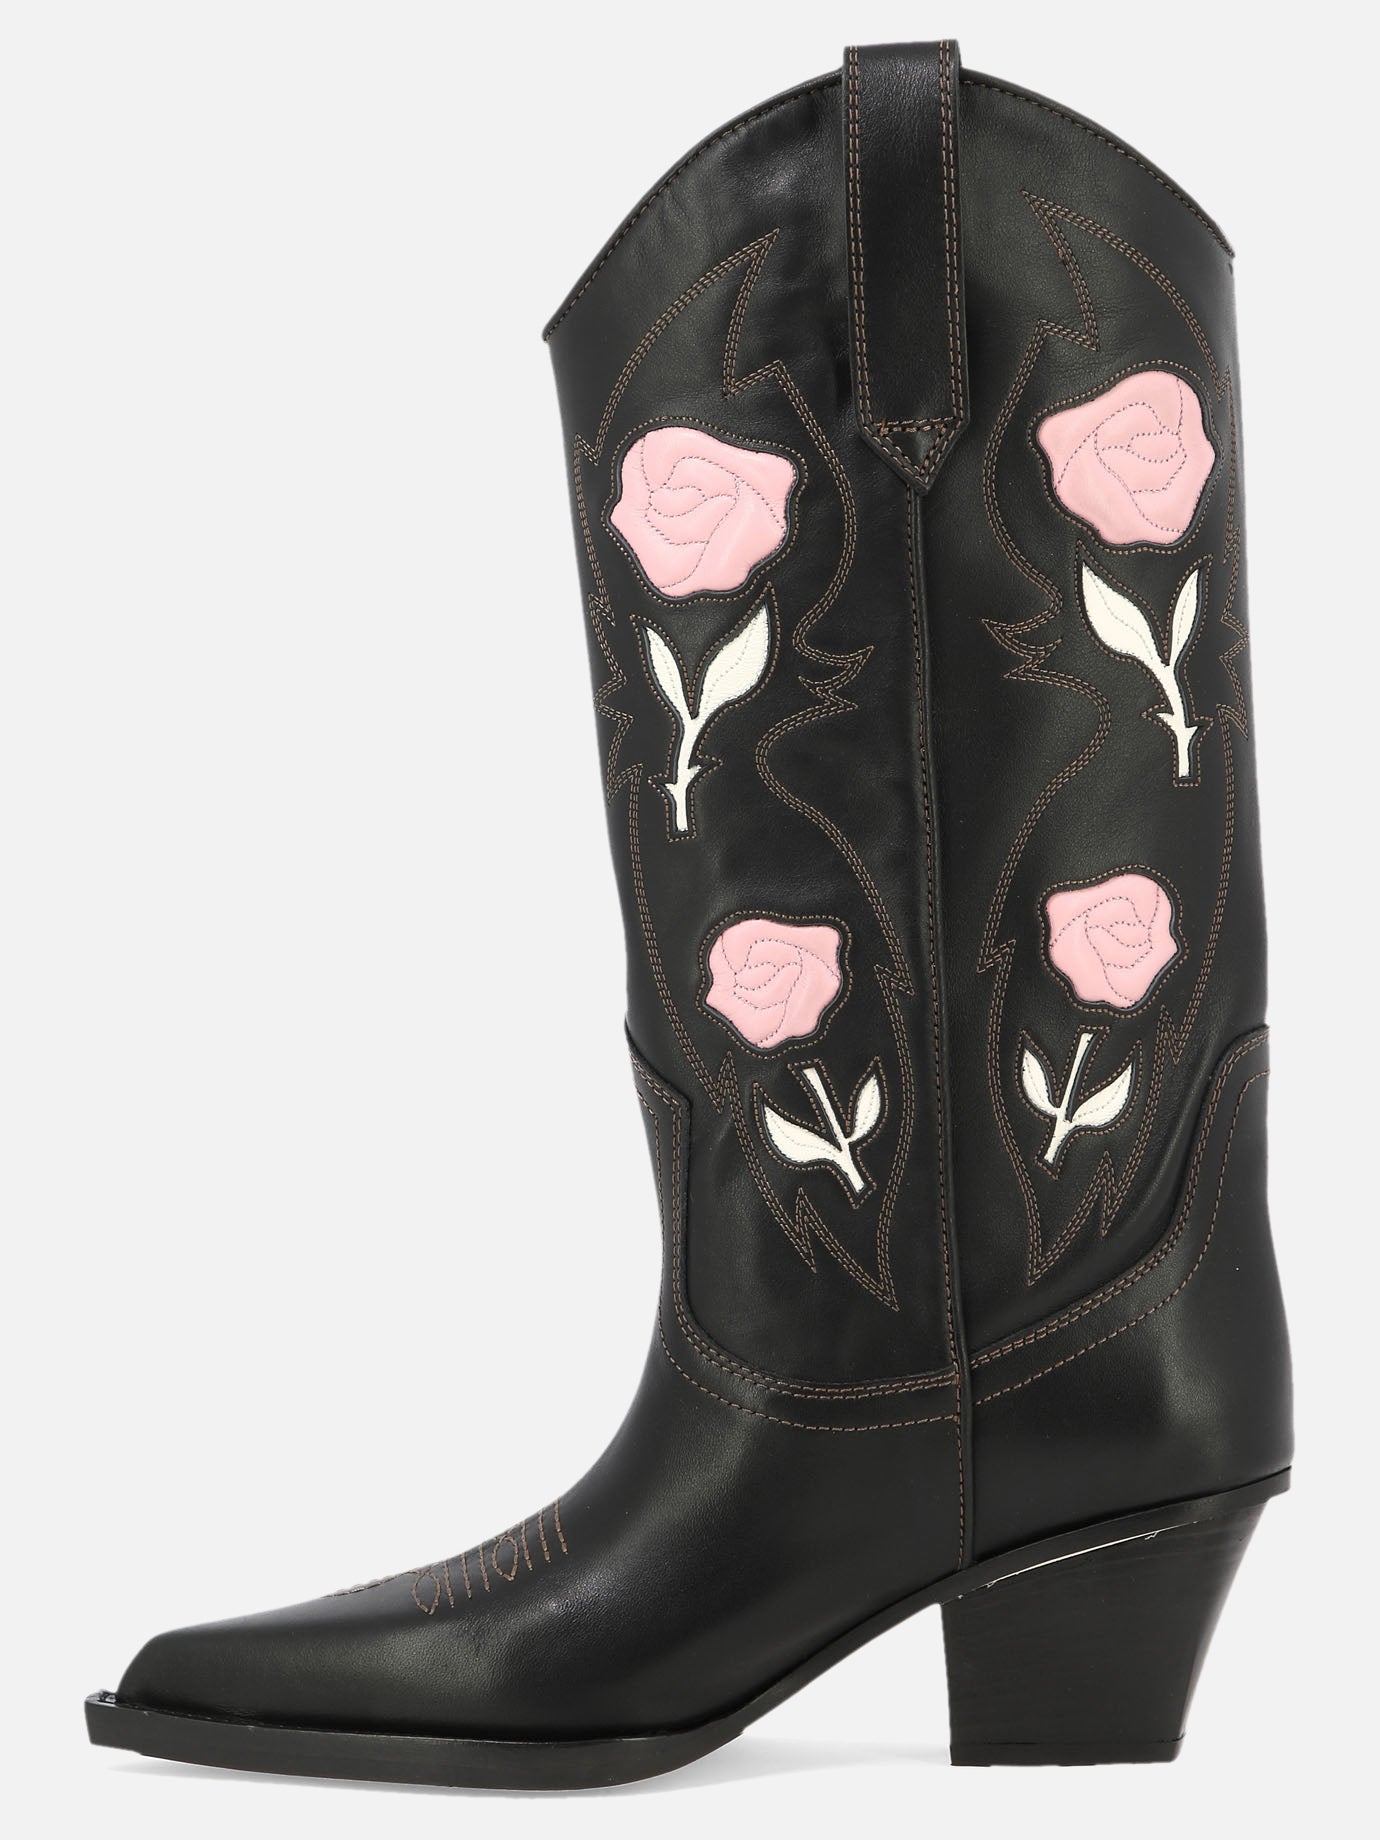 "Rosalia" boots